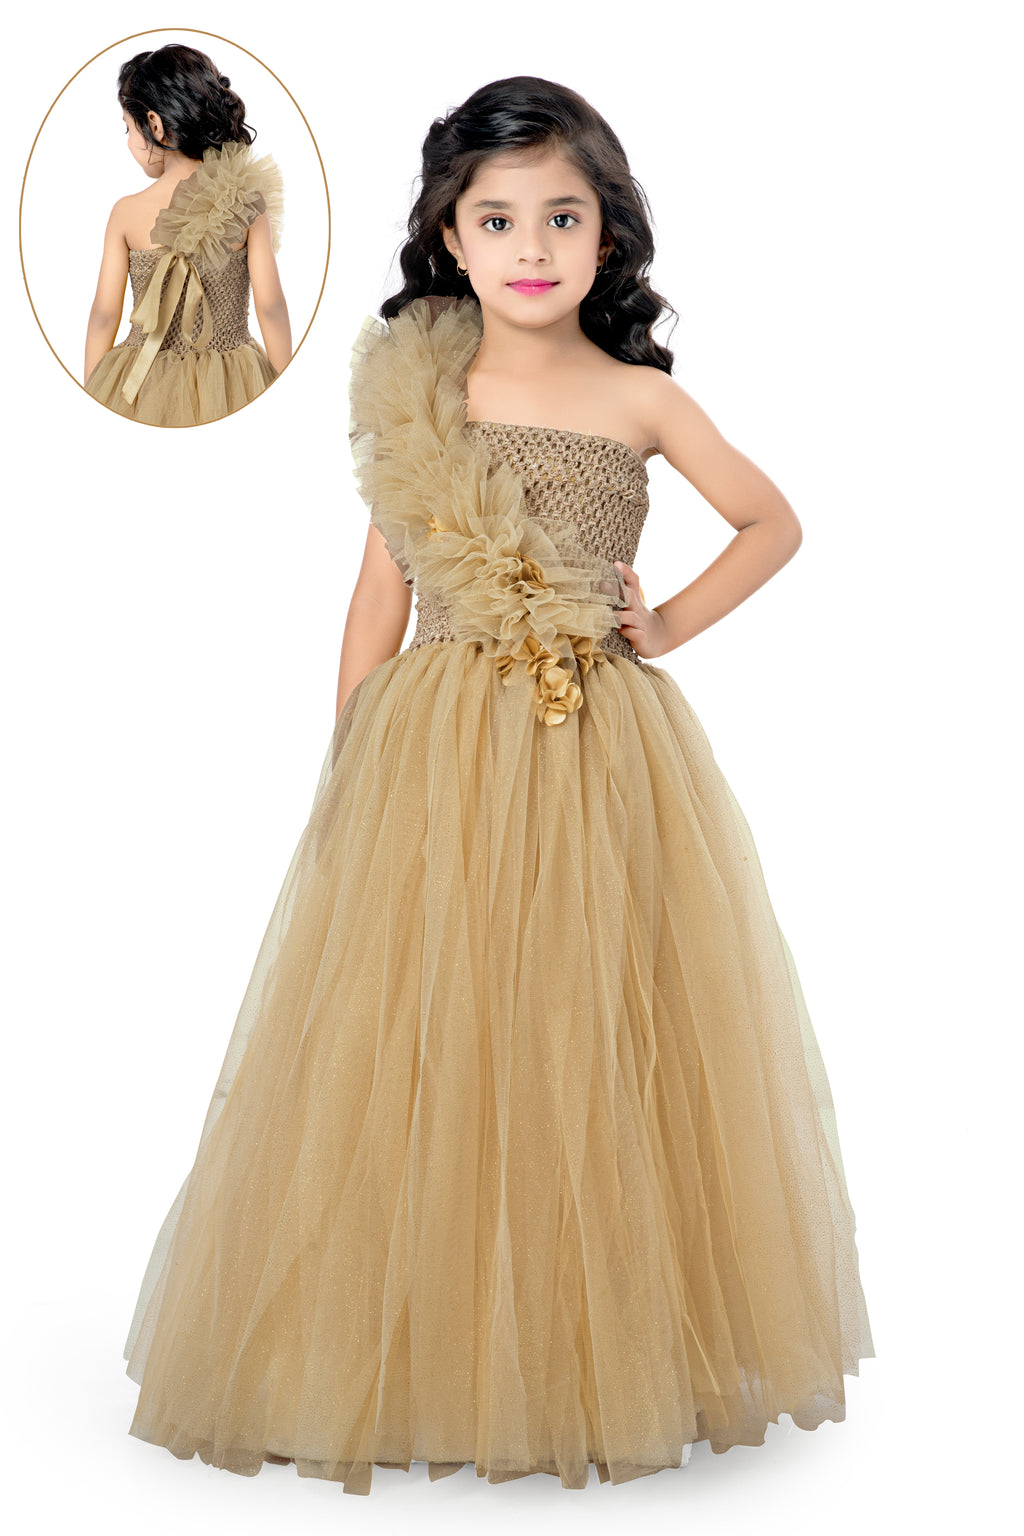 gaun dress with price 1000